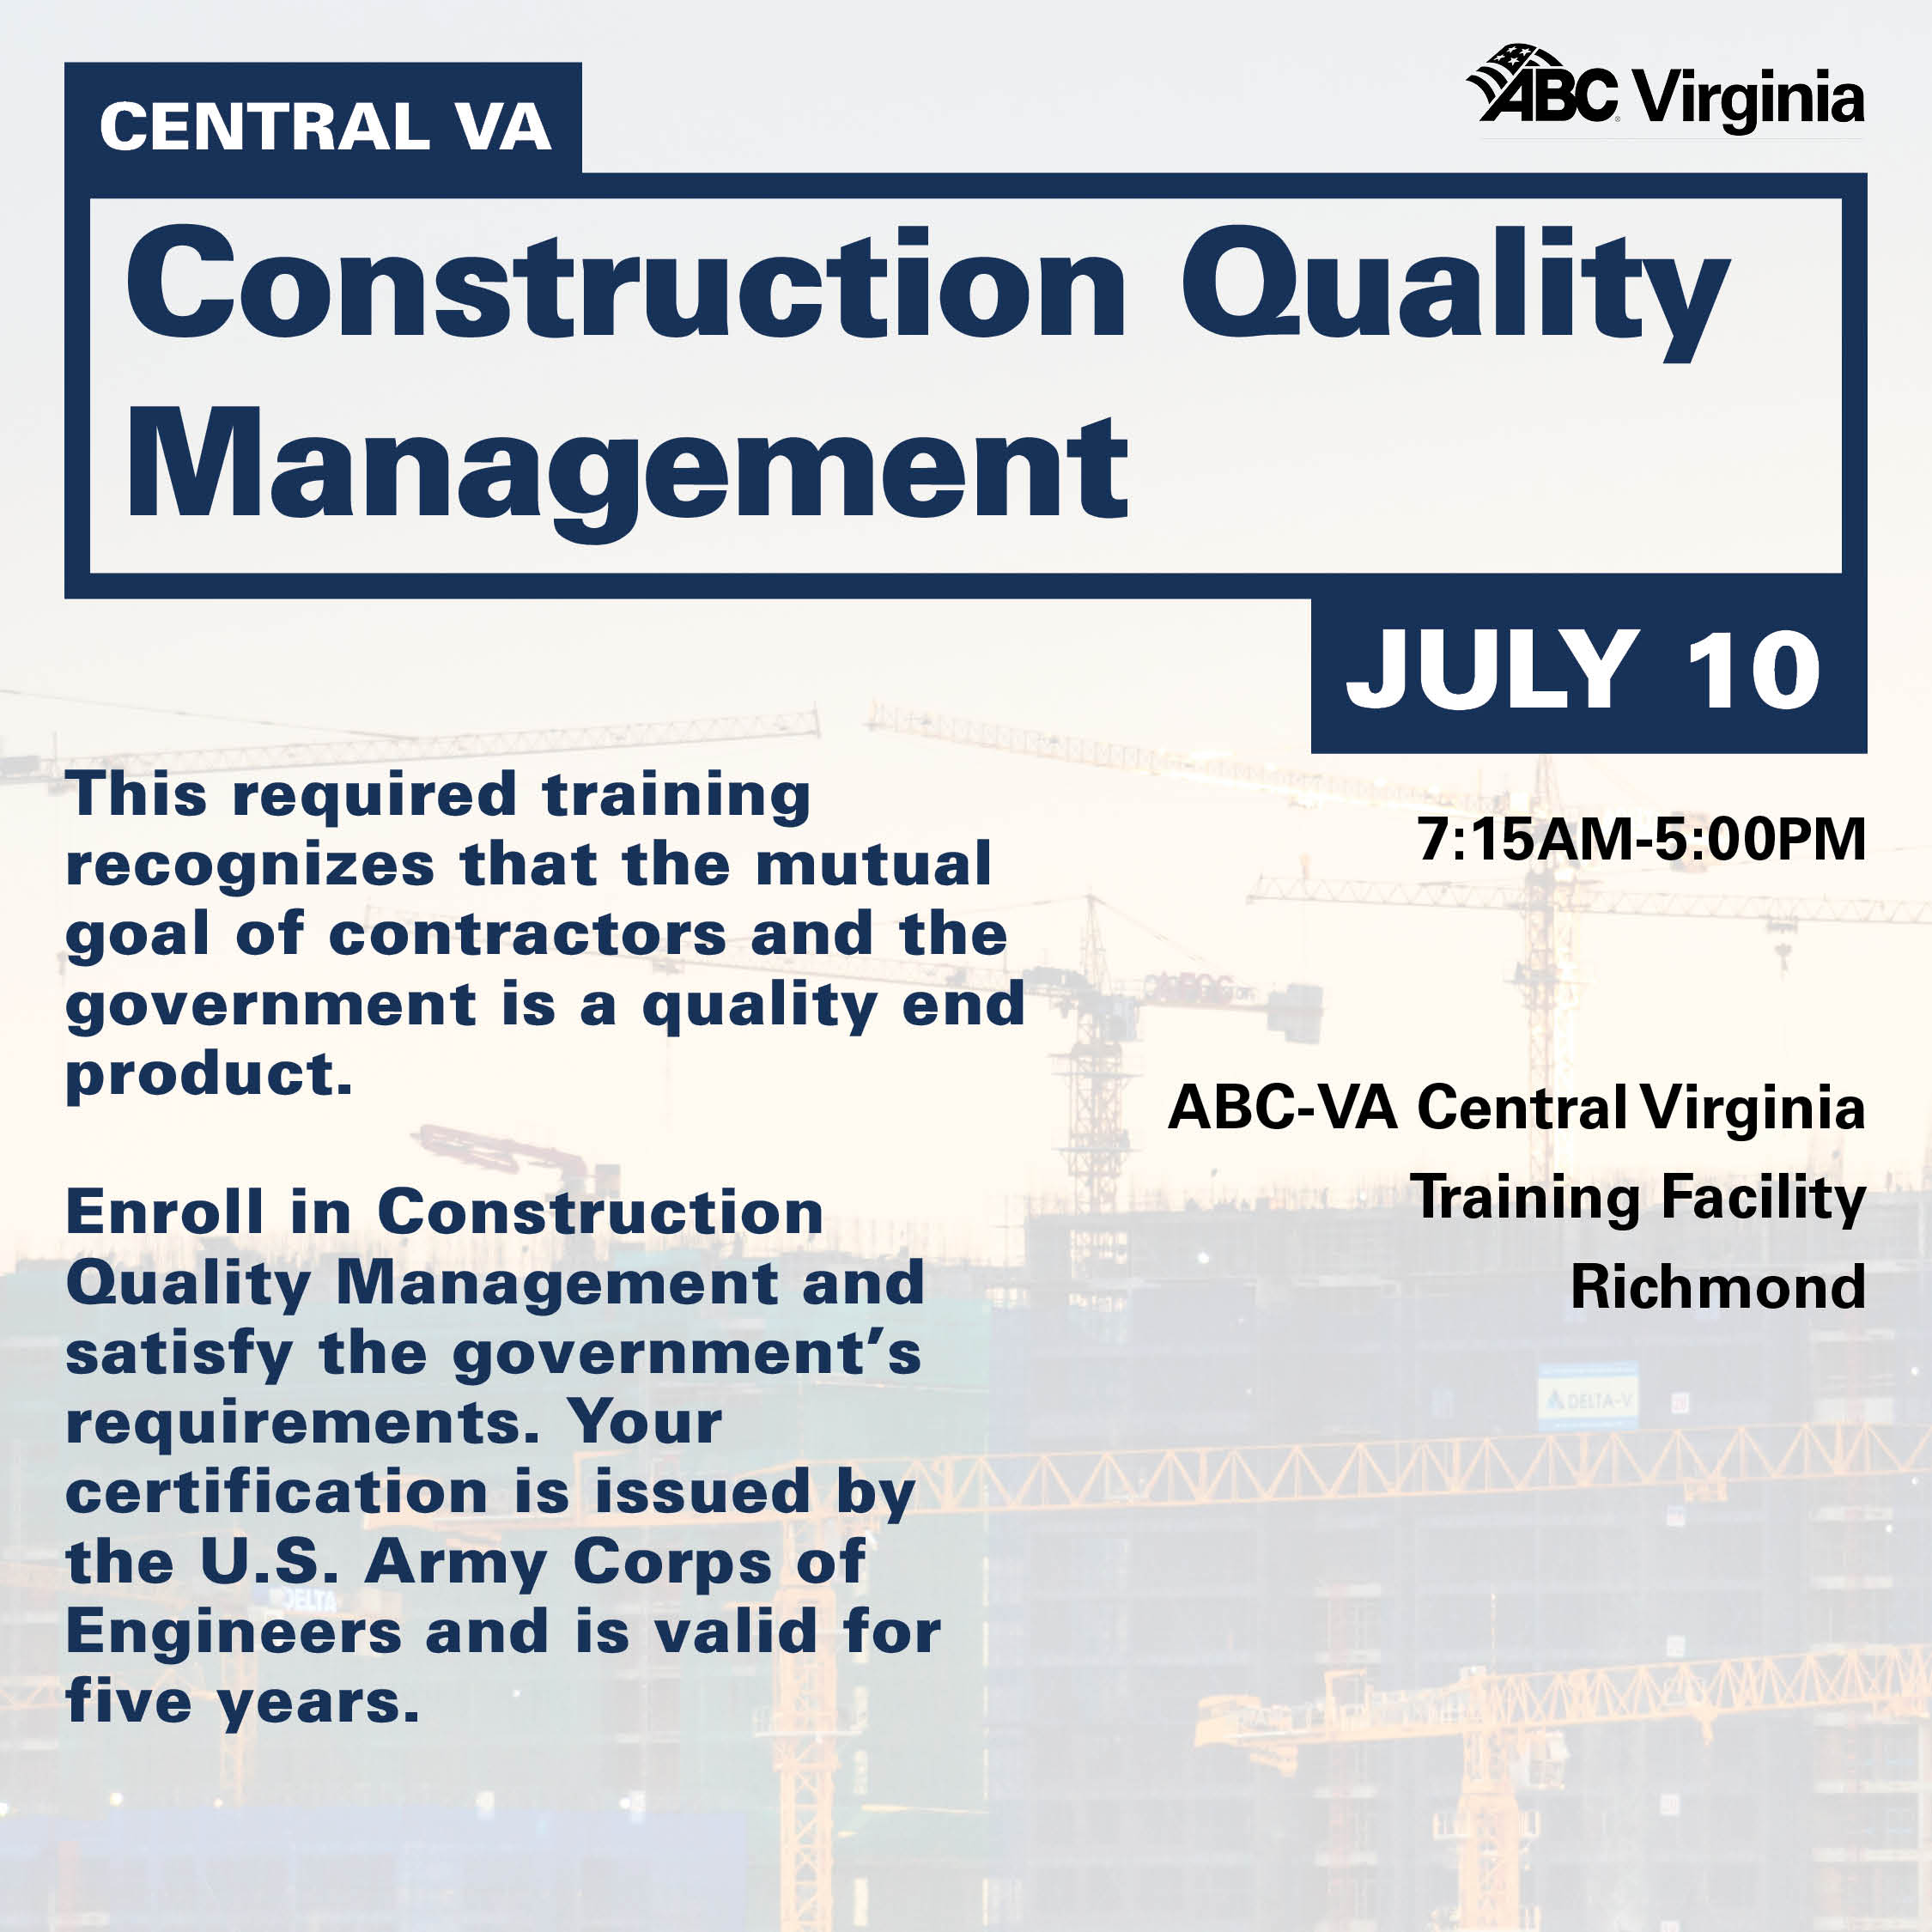 CV Construction Quality Management July 10 WEB